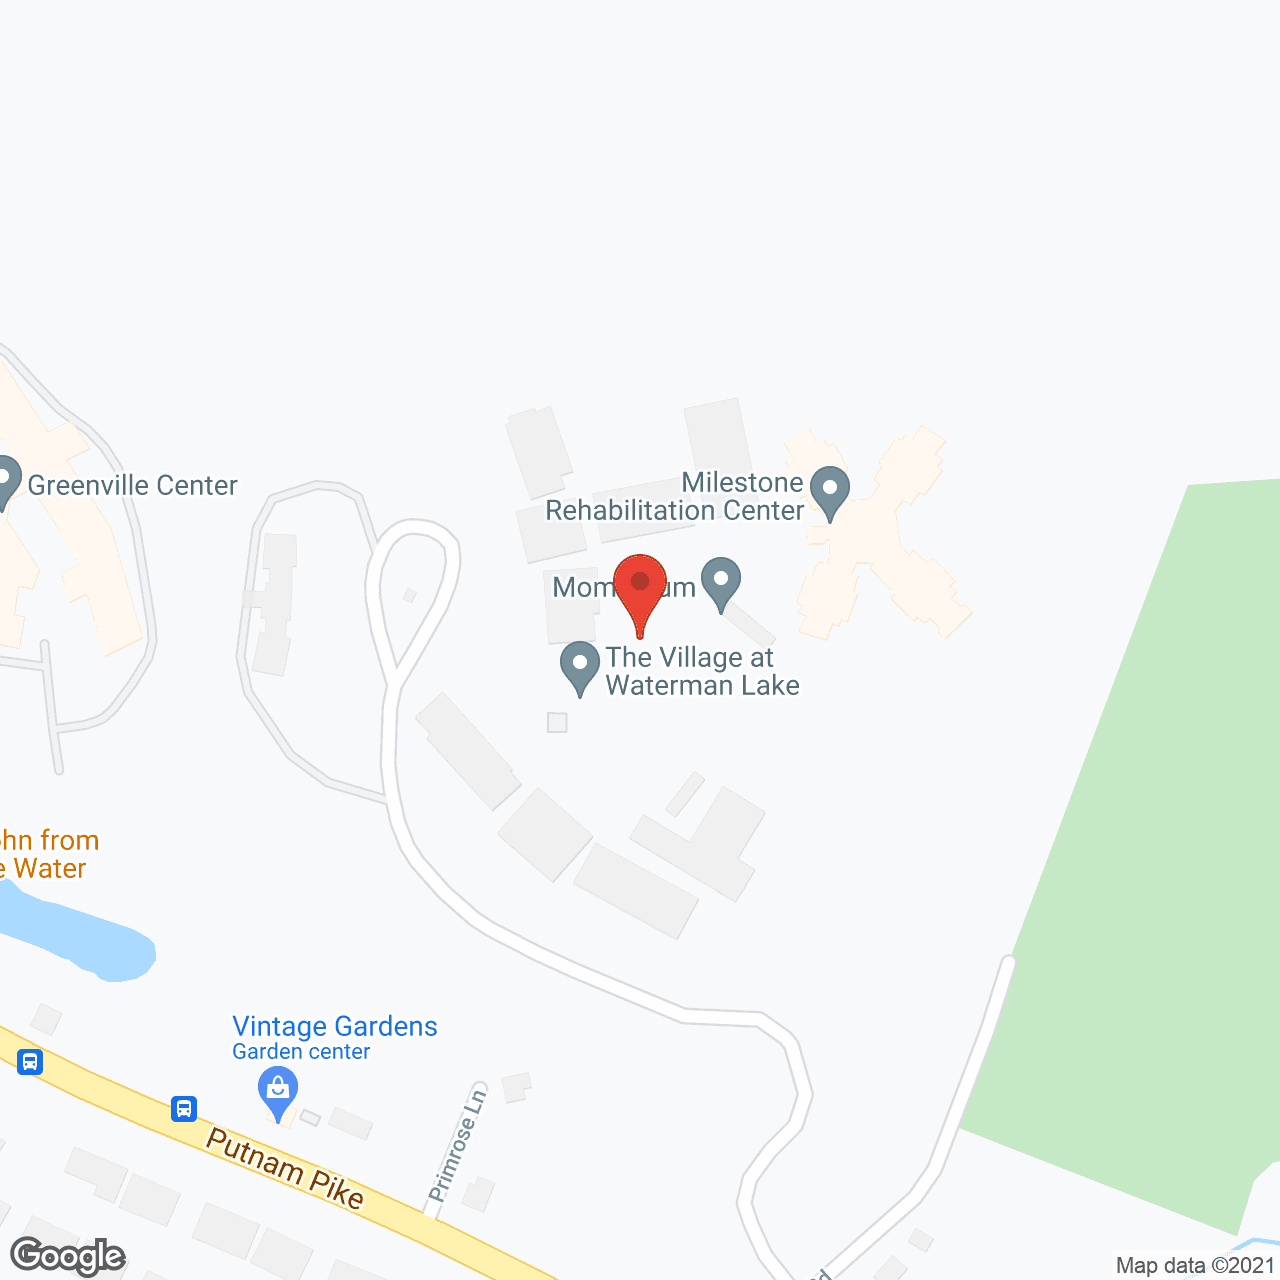 The Village at Waterman Lake in google map